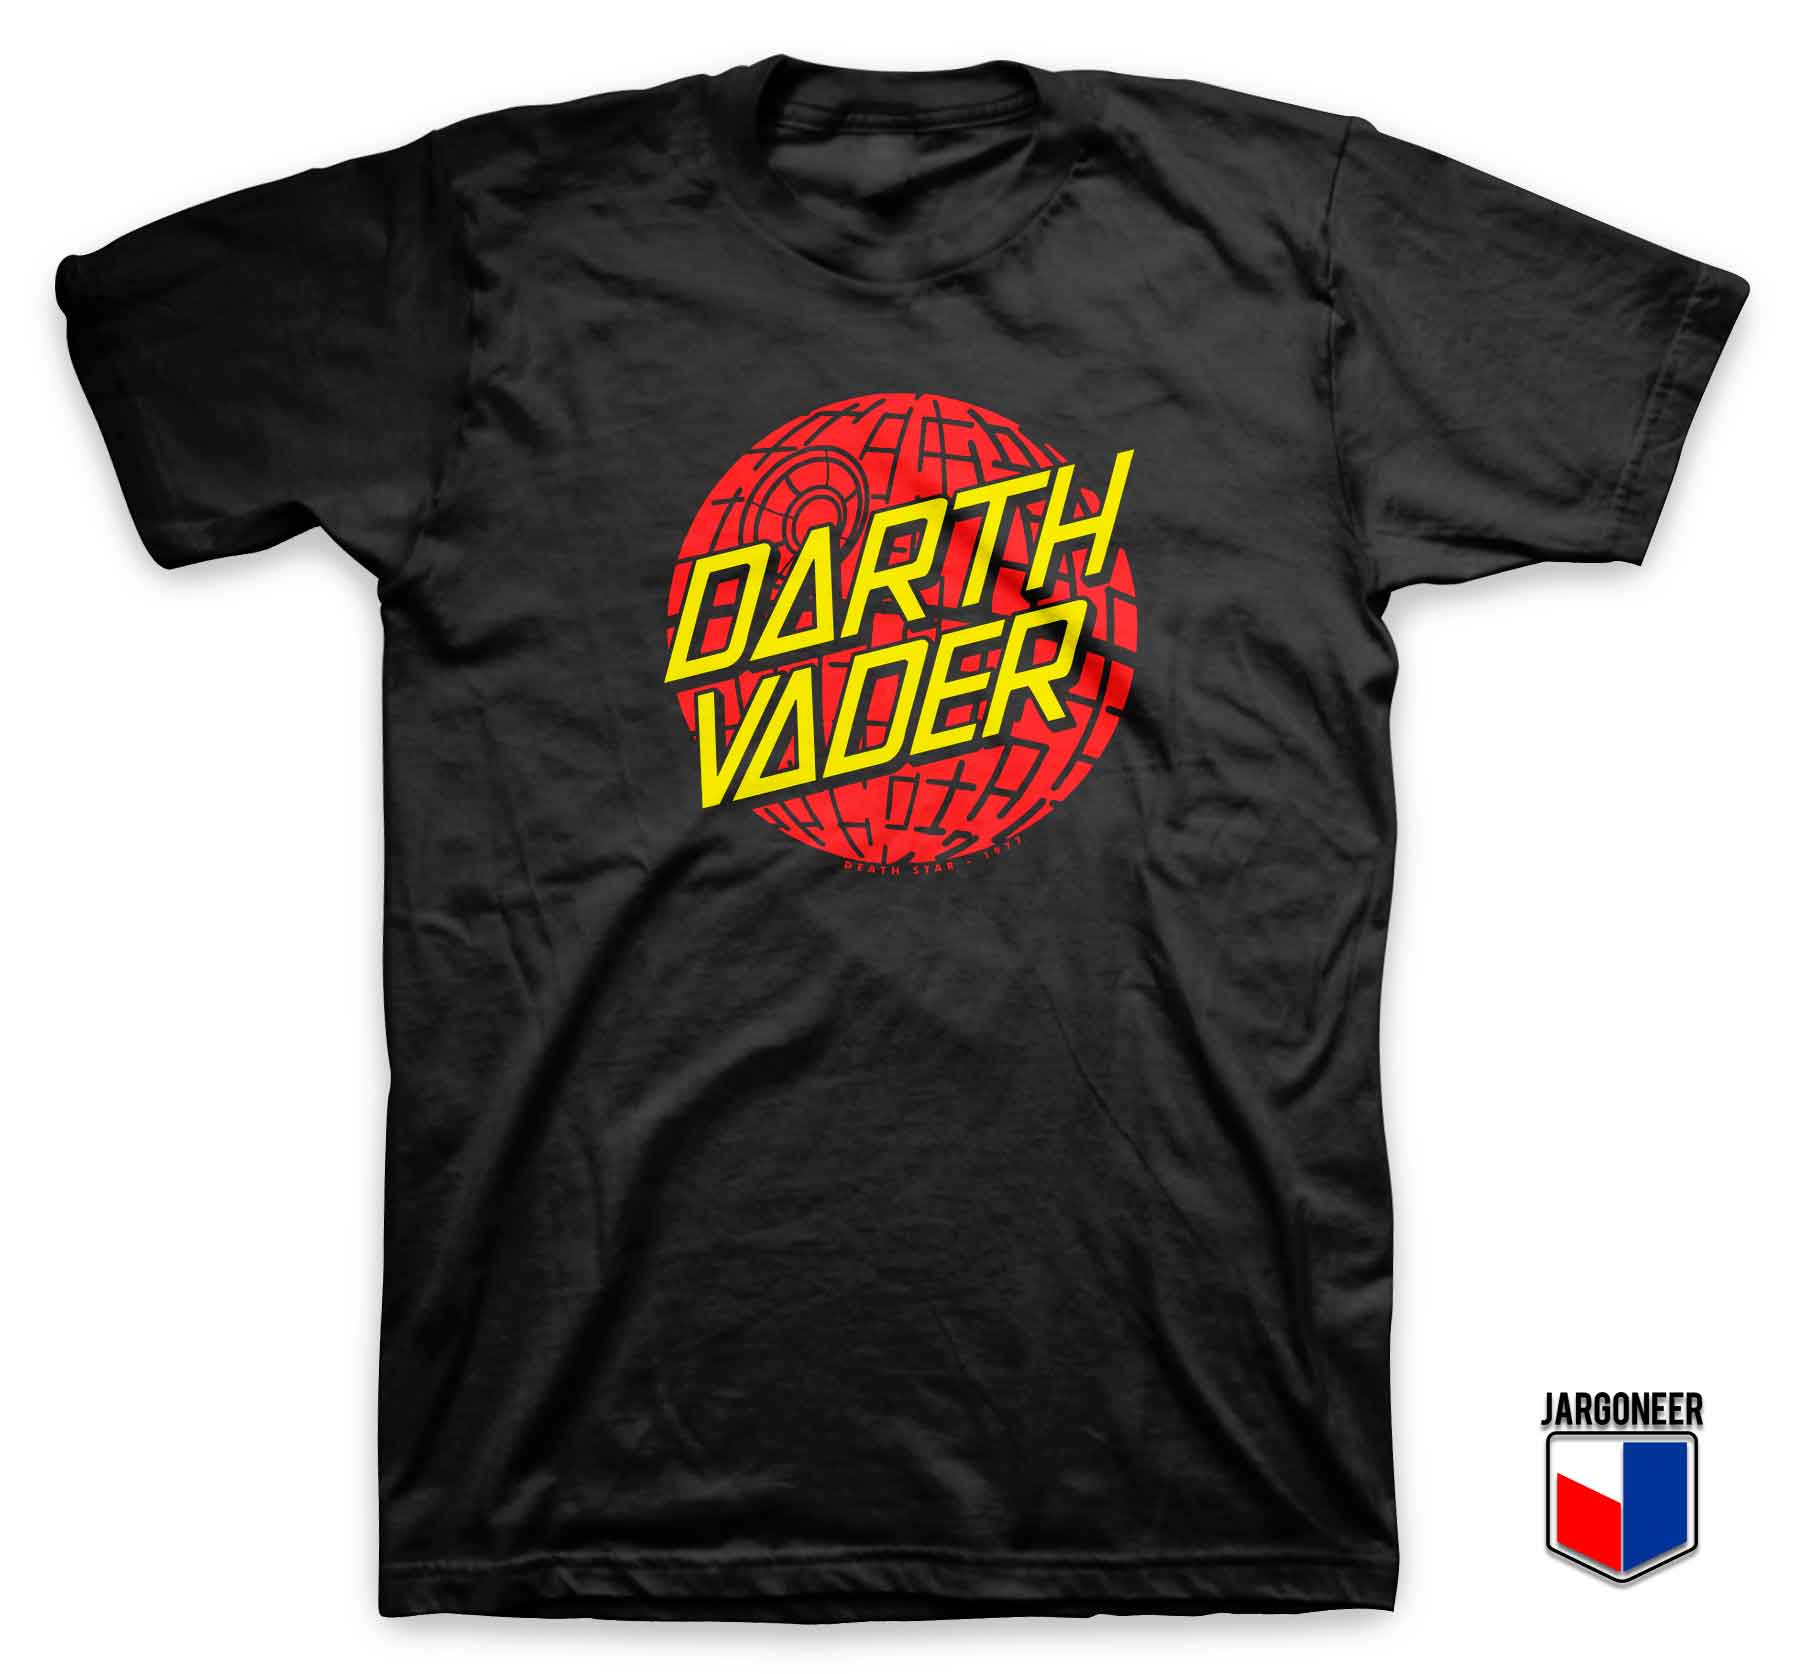 Darth Vader - Shop Unique Graphic Cool Shirt Designs